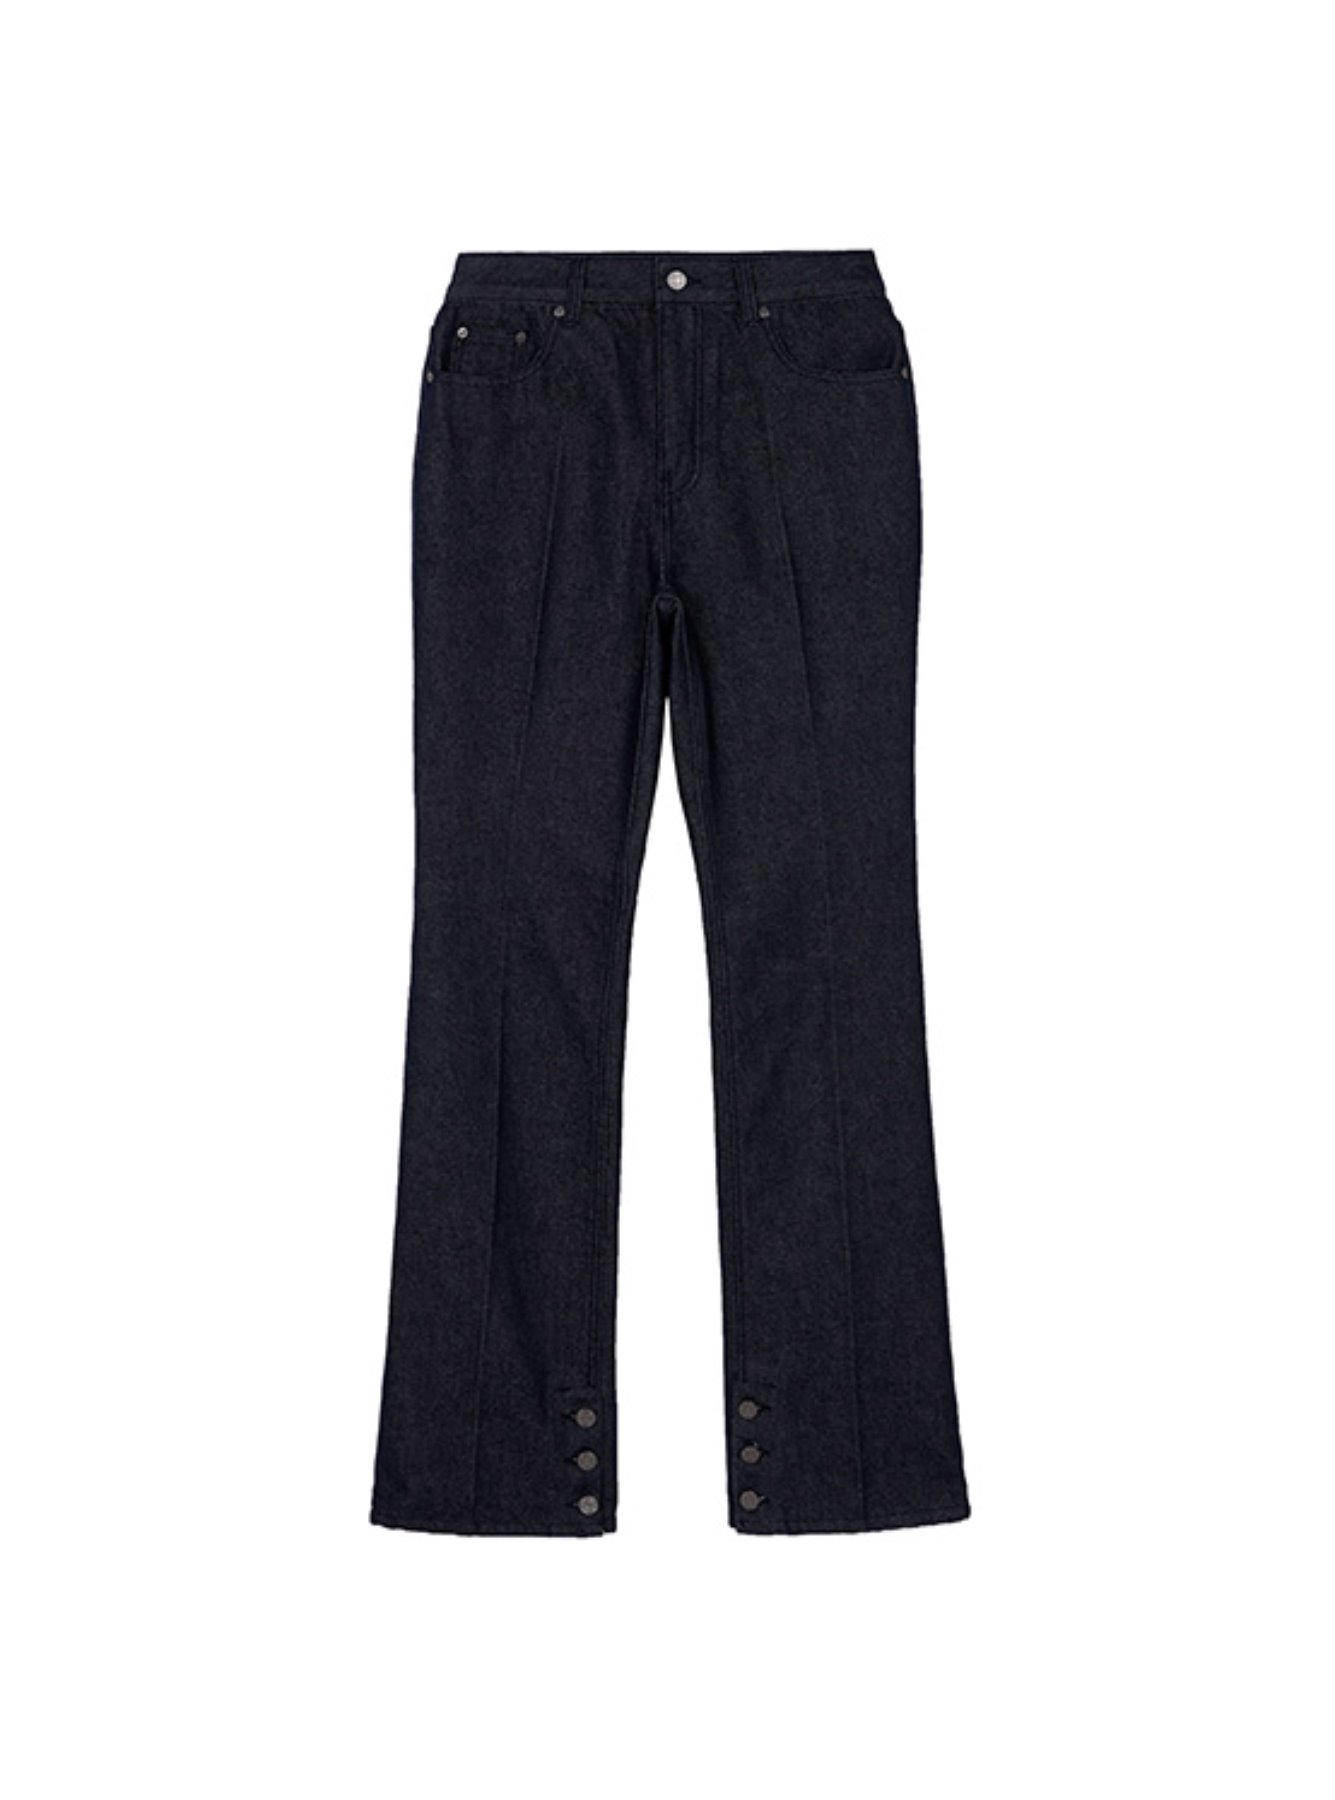 Semi-Bootcut Raw Denim Jeans in Indigo VJ2SL192-35